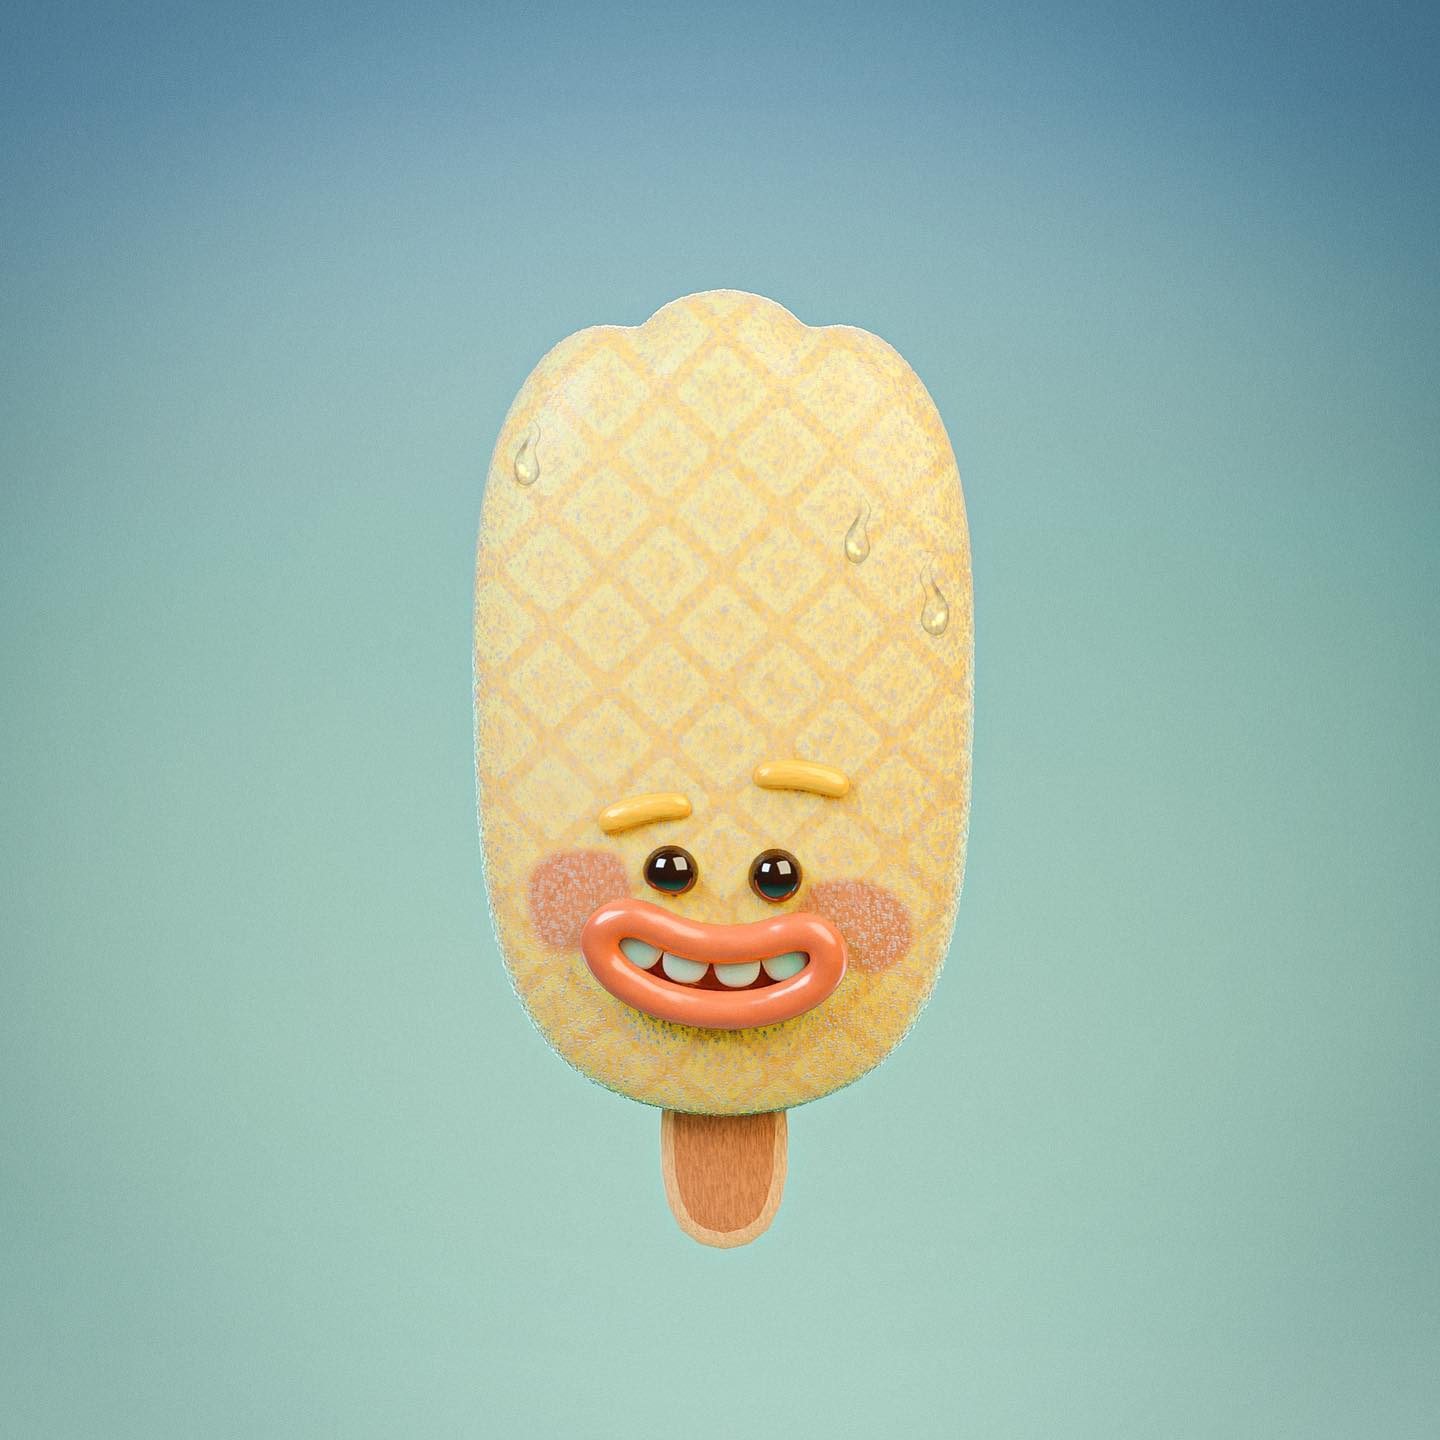 Ice cream characters